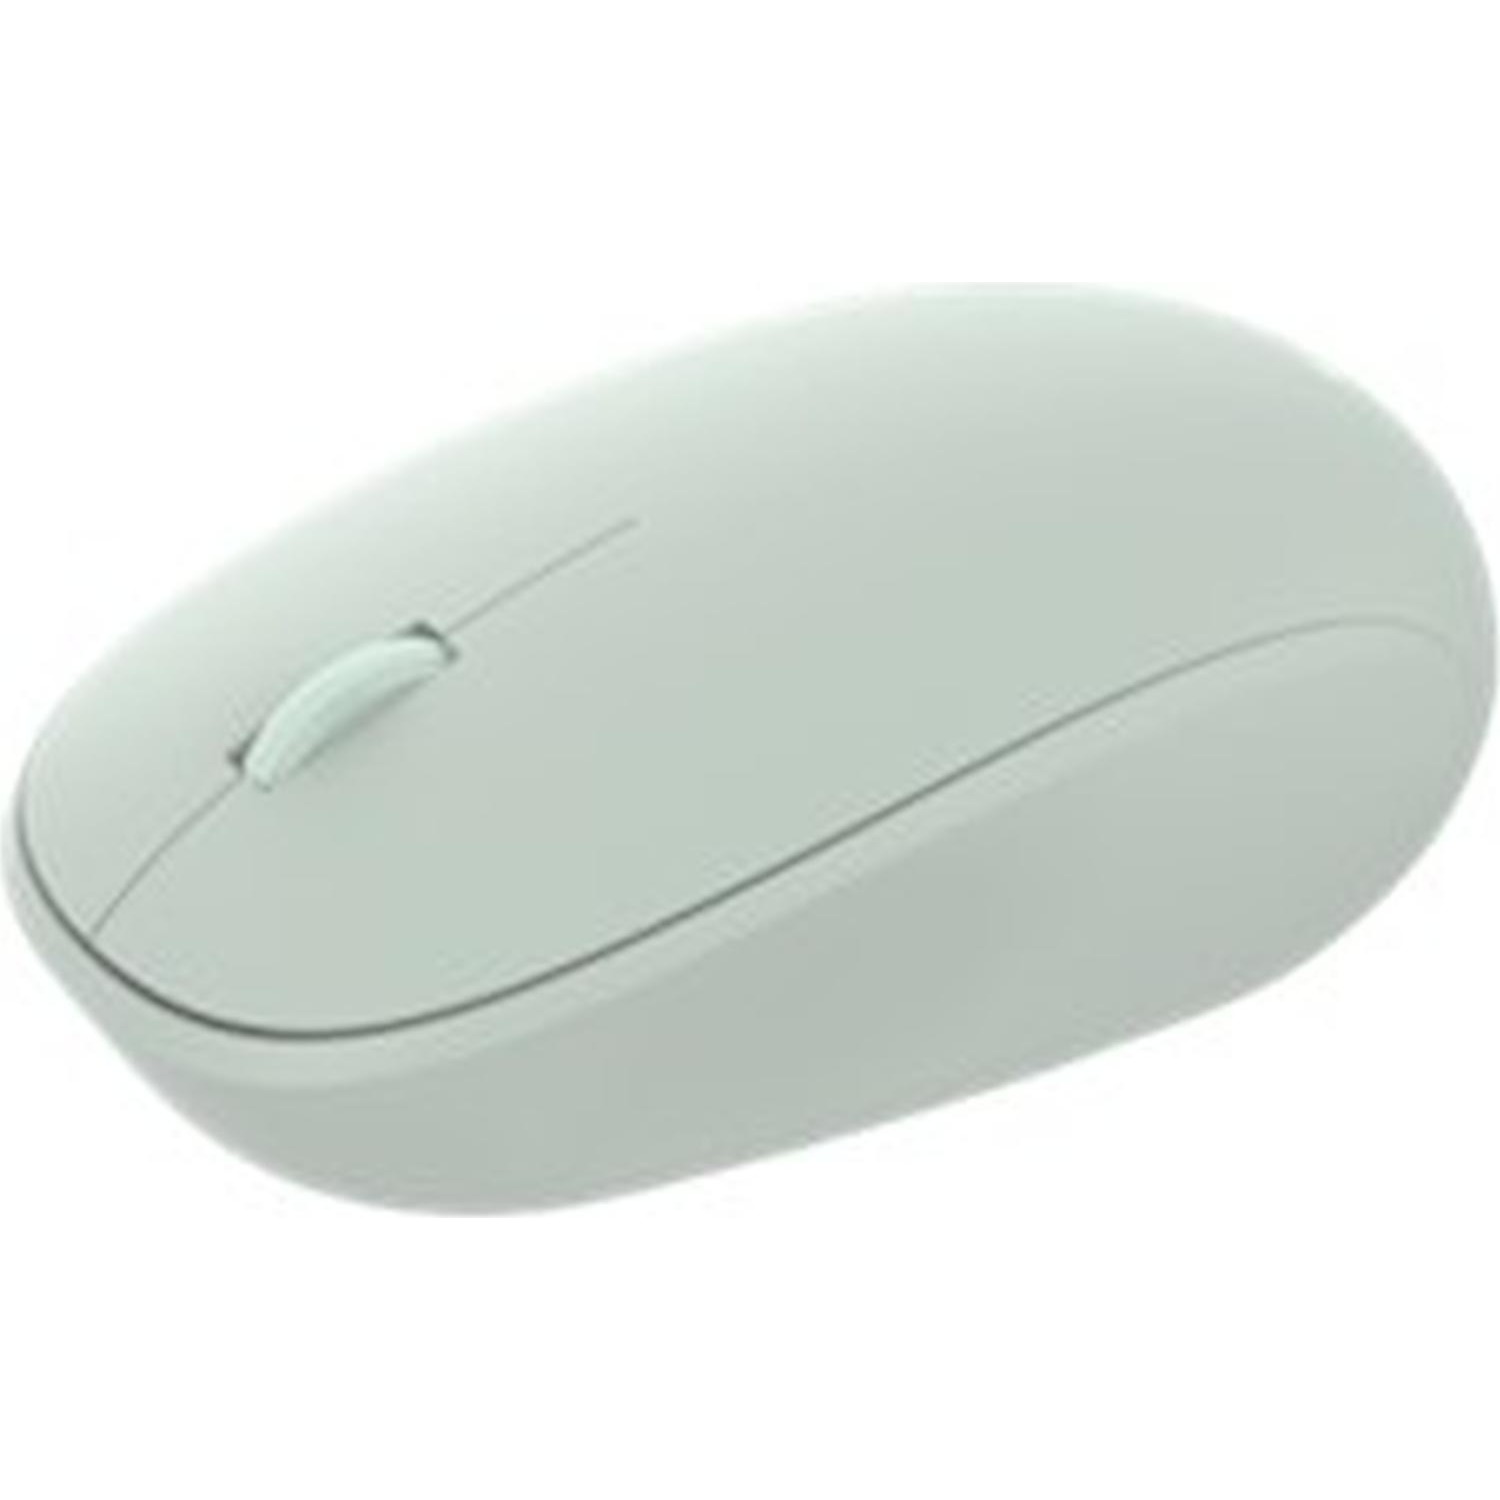 Immagine per Mouse Microsoft LIAONING menta da DIMOStore